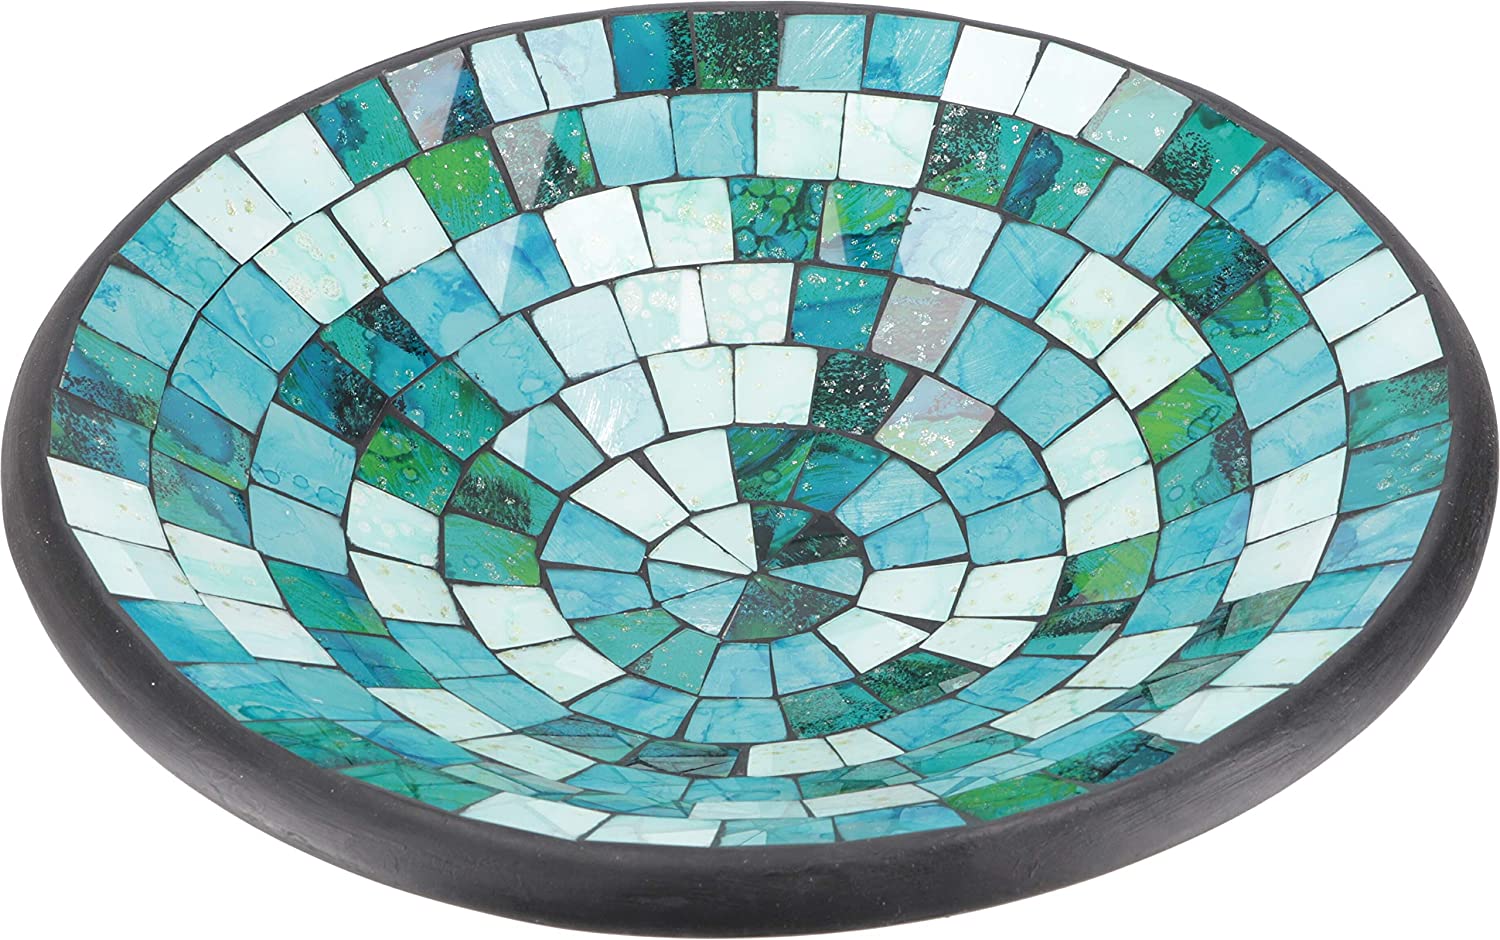 Guru-Shop Round Mosaic Bowl, Coaster, Decorative Bowl, Handmade Ceramic